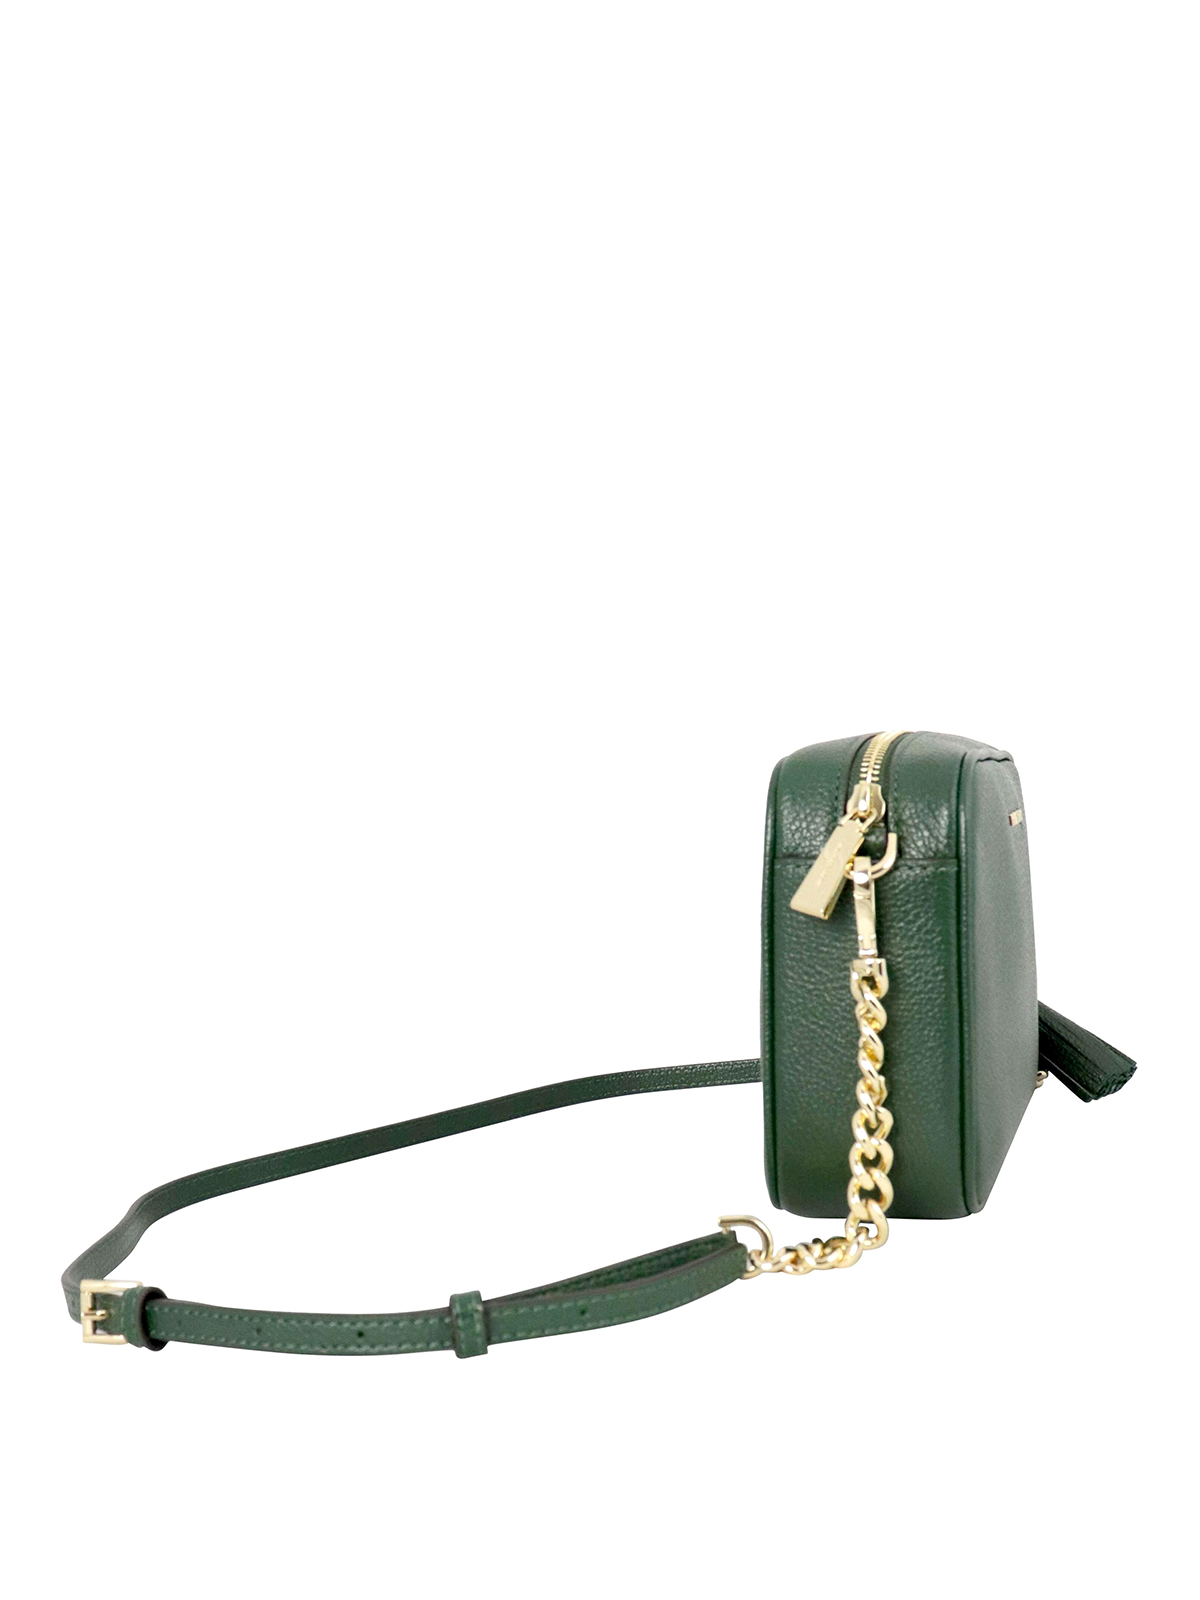 MICHAEL KORS: mini bag for woman - Leather  Michael Kors mini bag  32F7GGNM8L online at